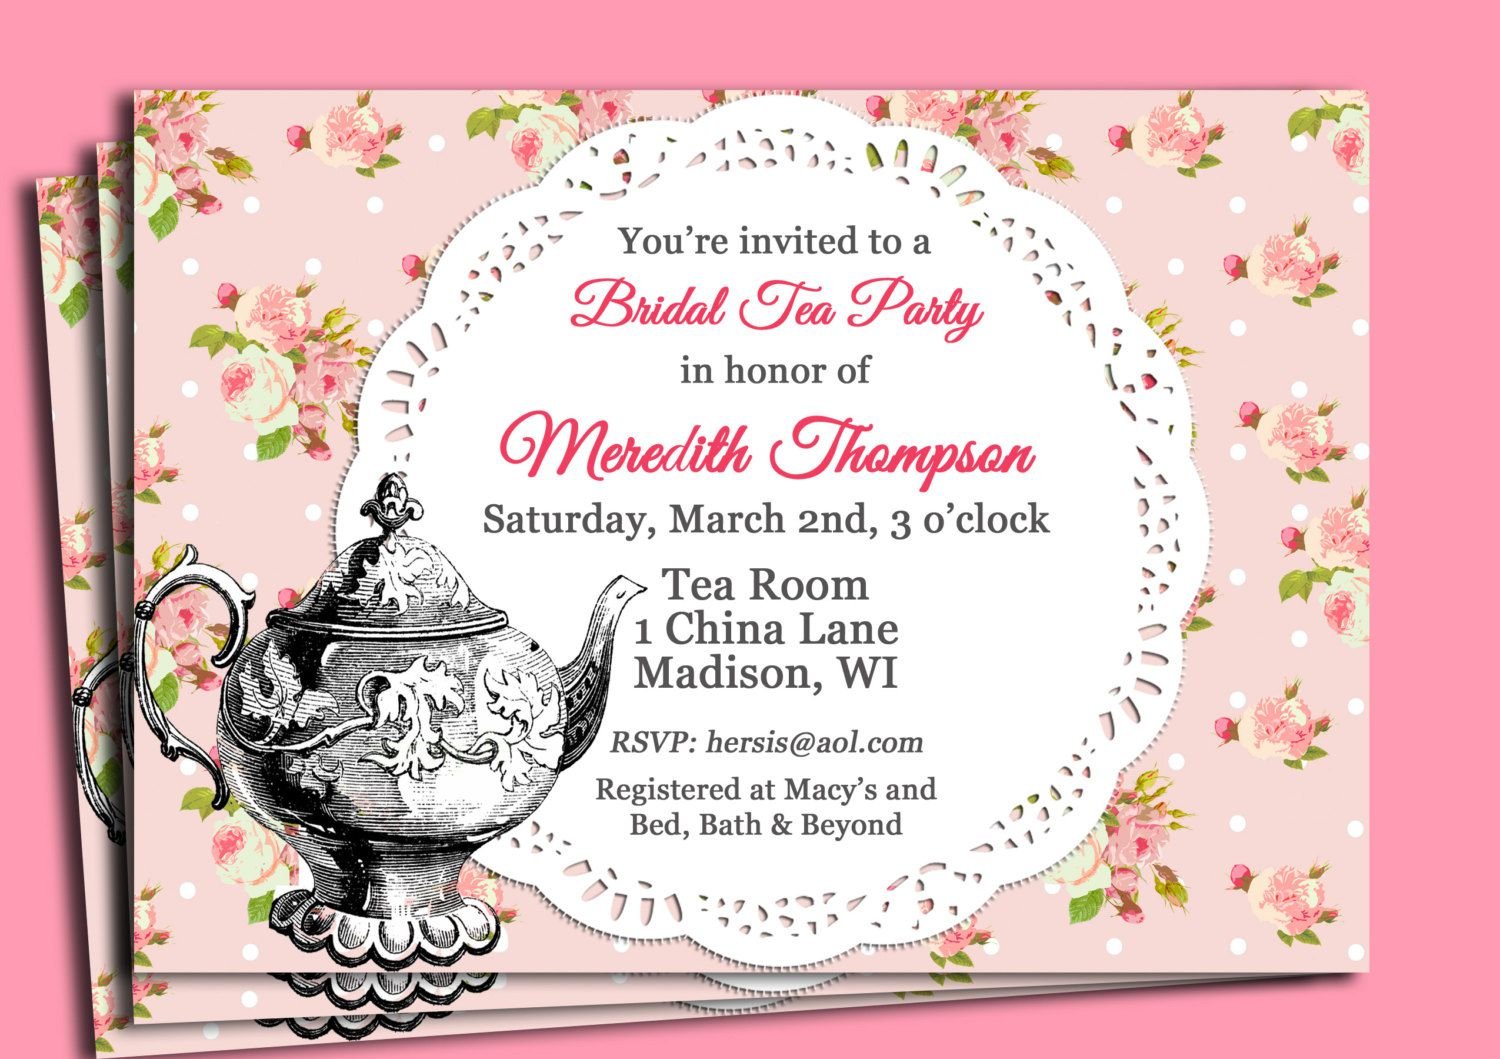 Bridal Shower Tea Party Invitations   Bridal Shower Tea Party